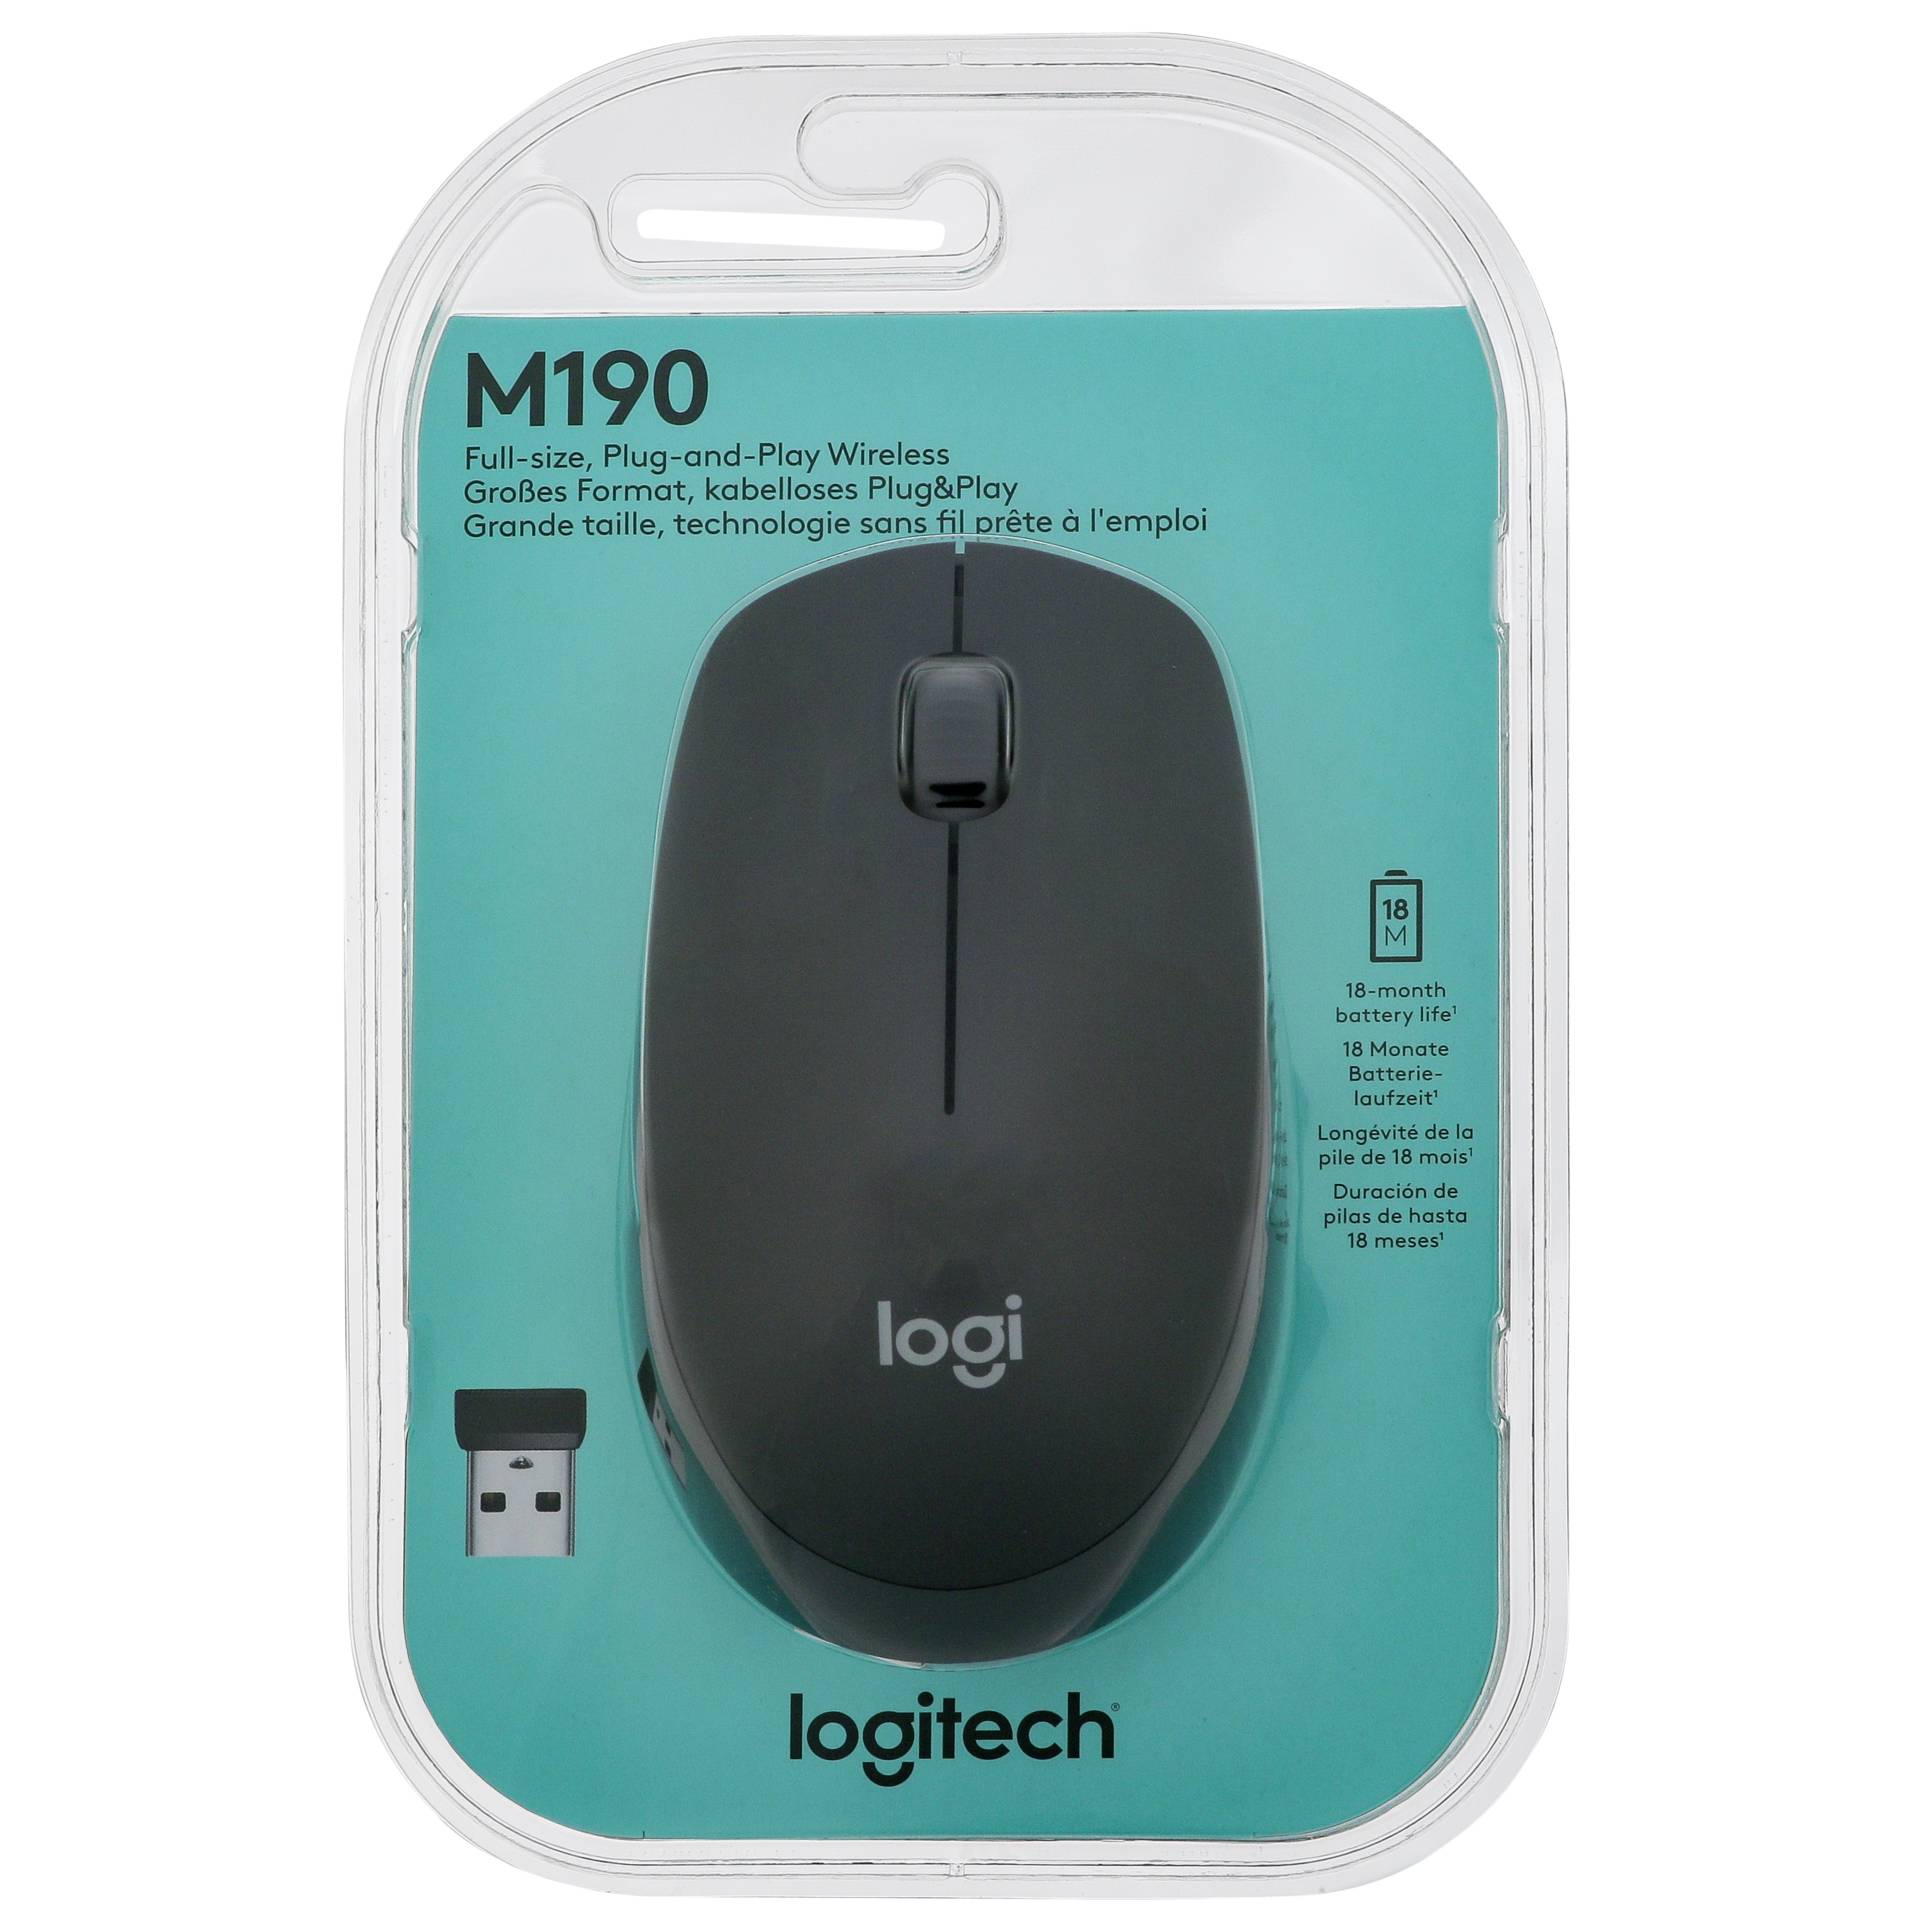 Logitech M190 Full-Size Wireless Mouse dunkelgrau, USB 